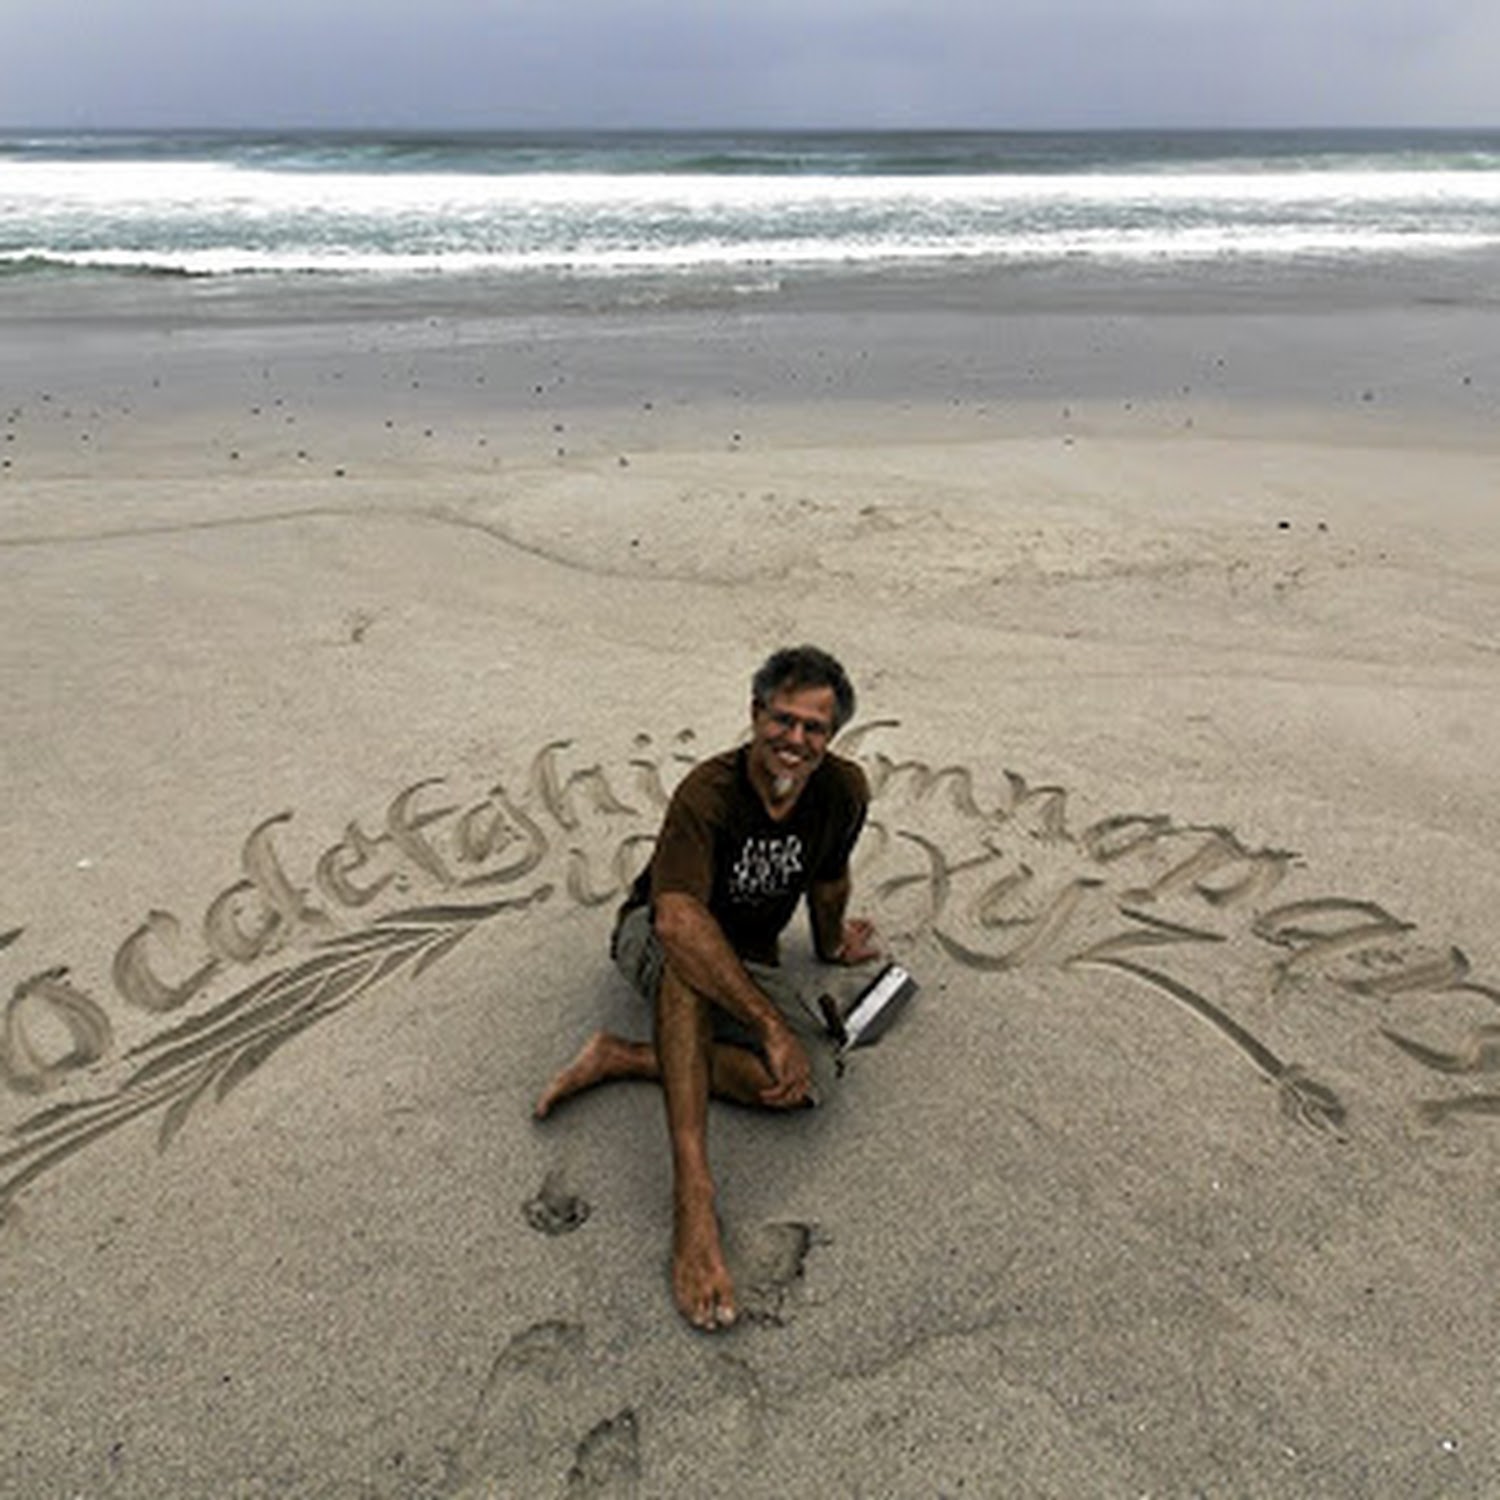 Picture of Andrew Van Der Merwe and beach calligraphy